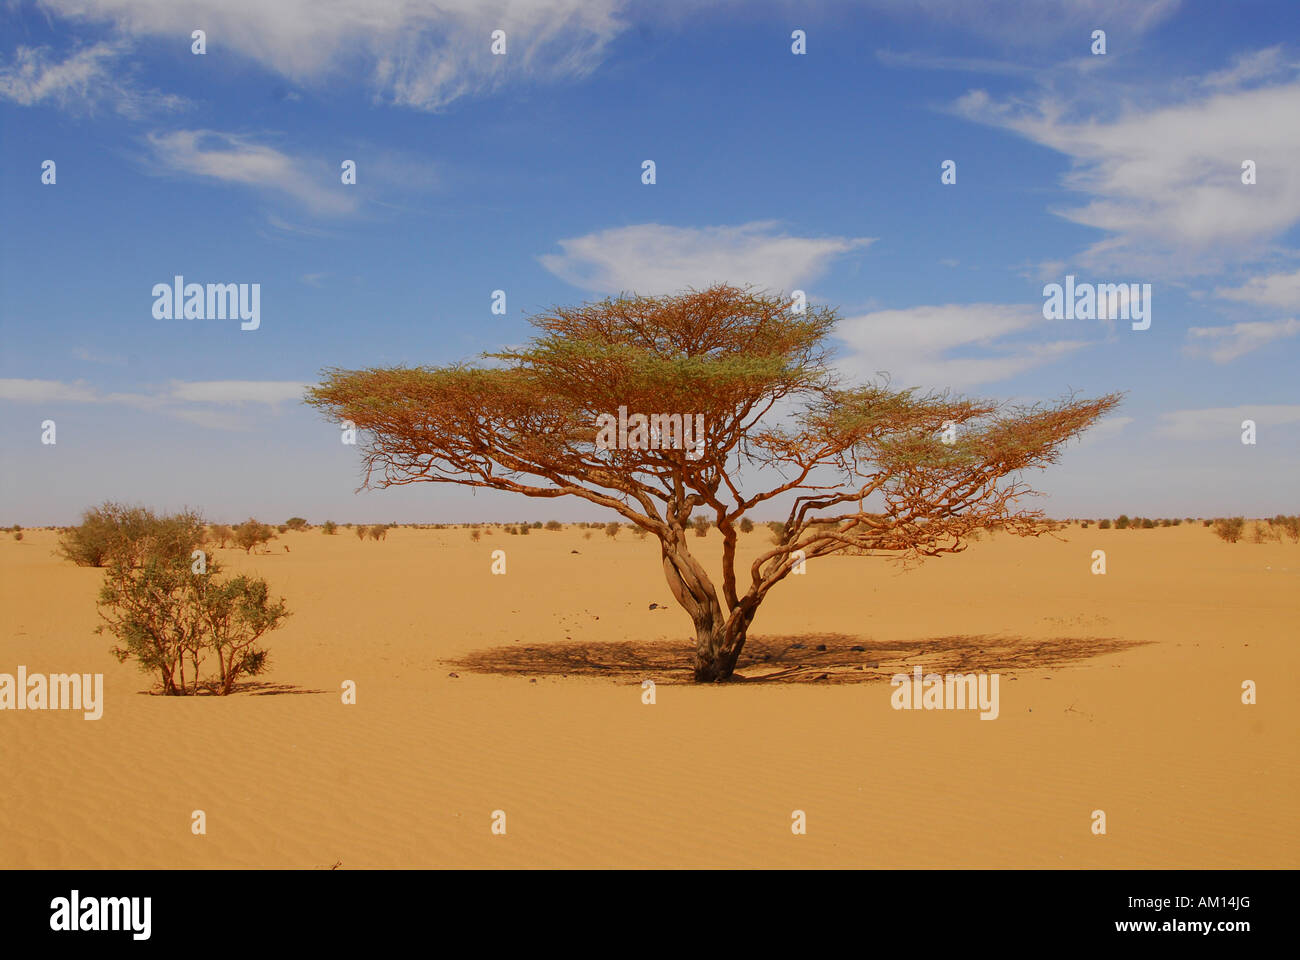 Acacia tree, Bayuda desert, Sudan Stock Photo